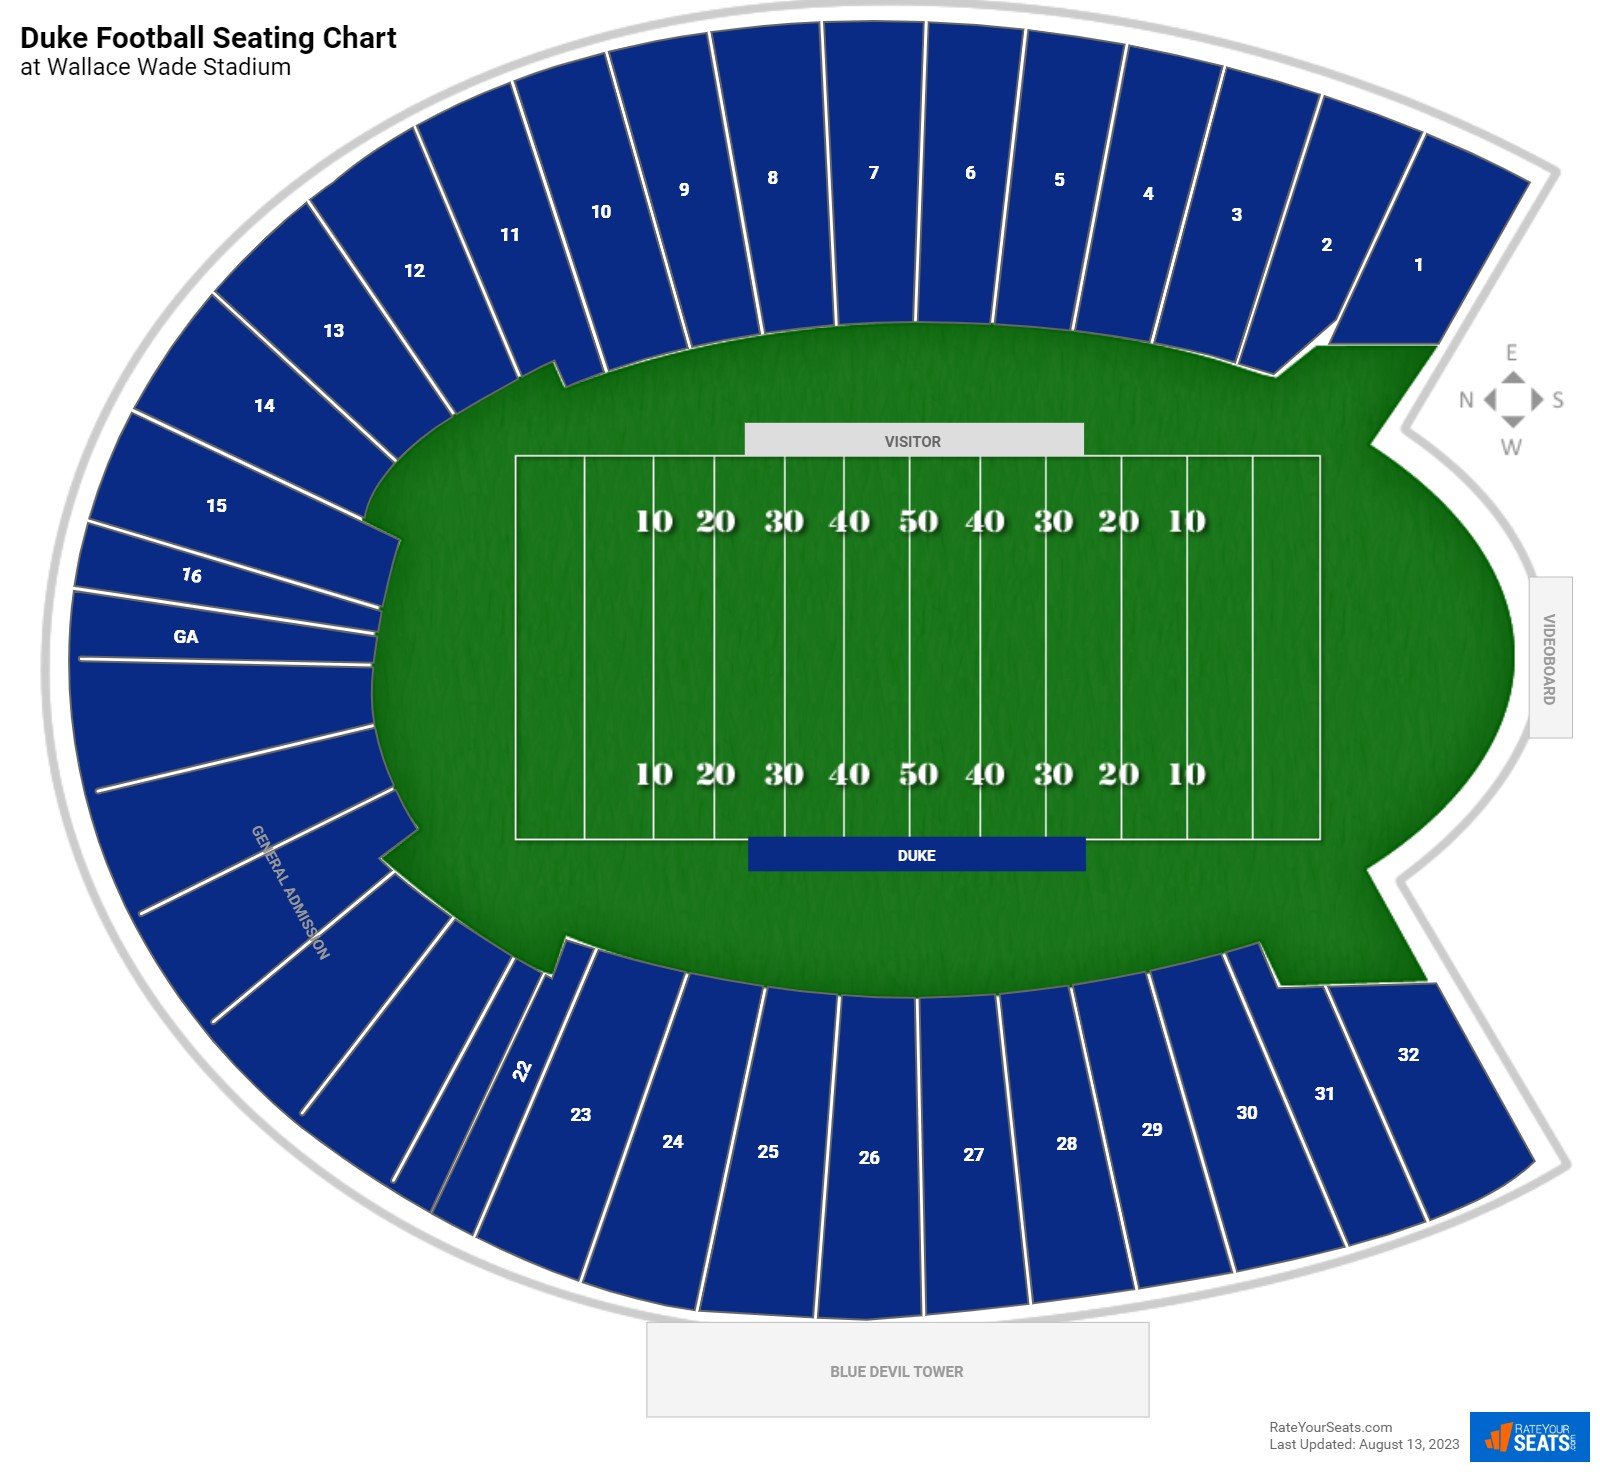 Duke Blue Devils Seating Chart at Wallace Wade Stadium